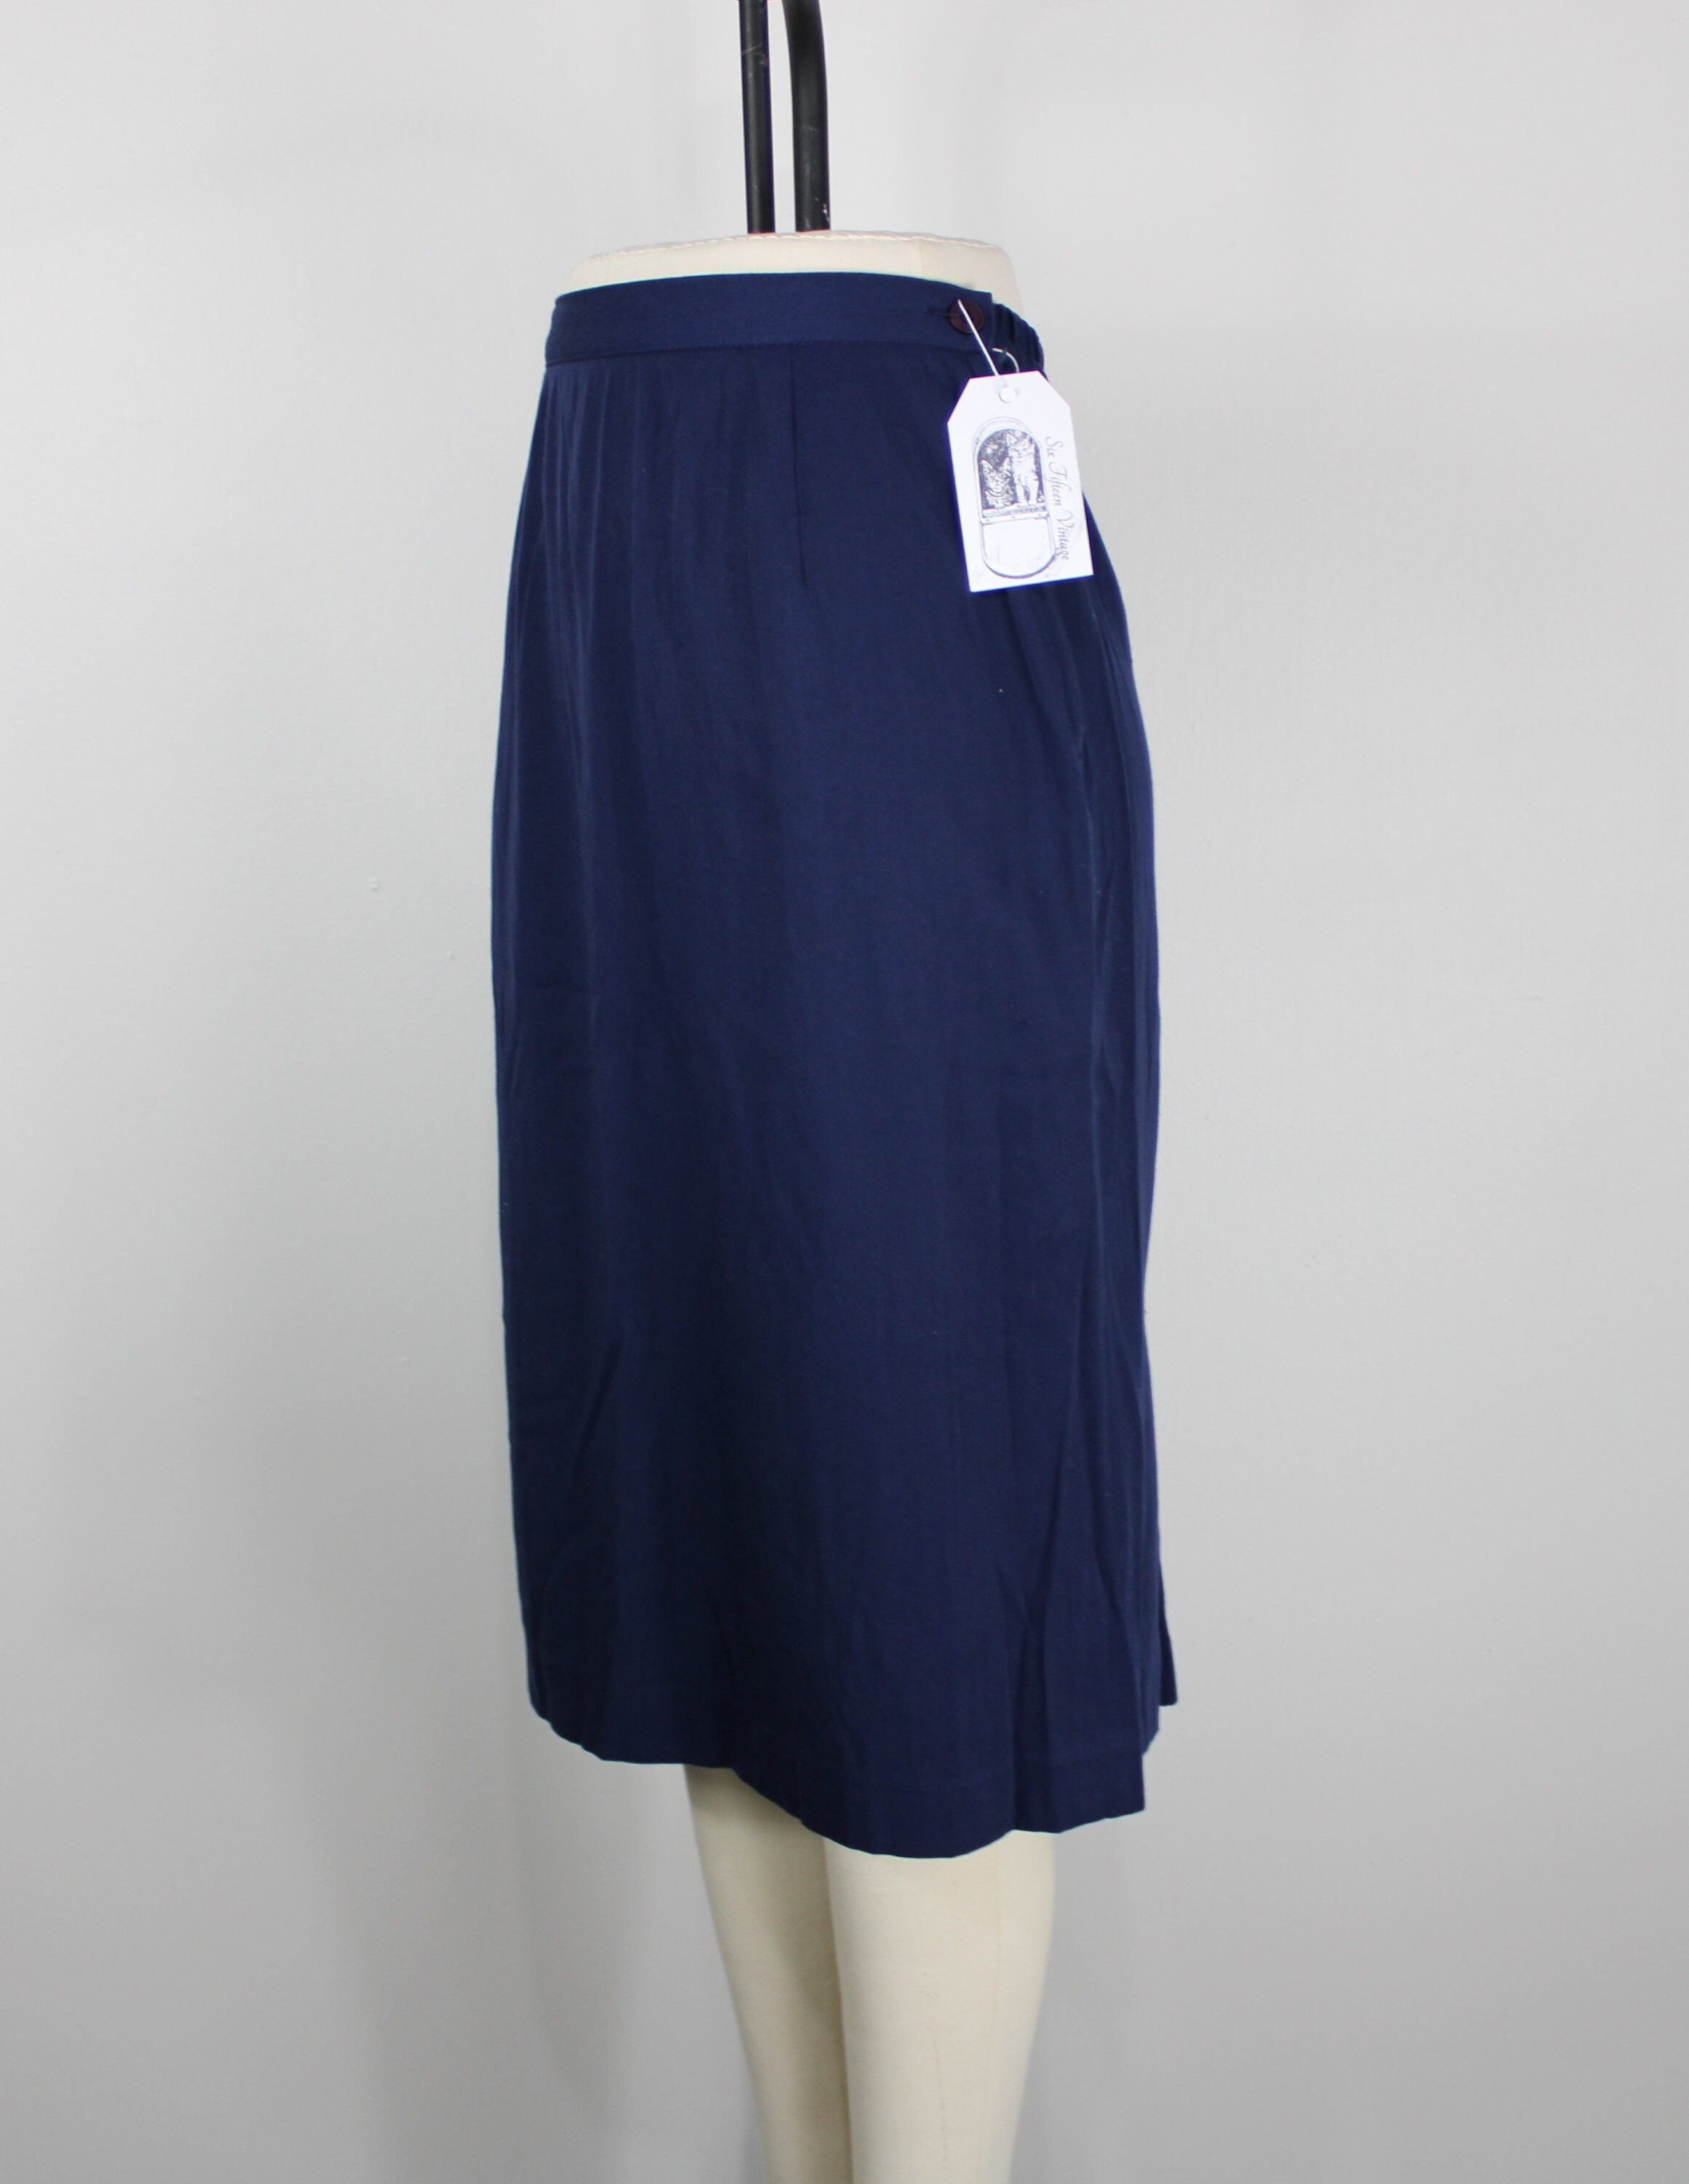 Vintage 1980's Skirt by Suburban Petites - Etsy